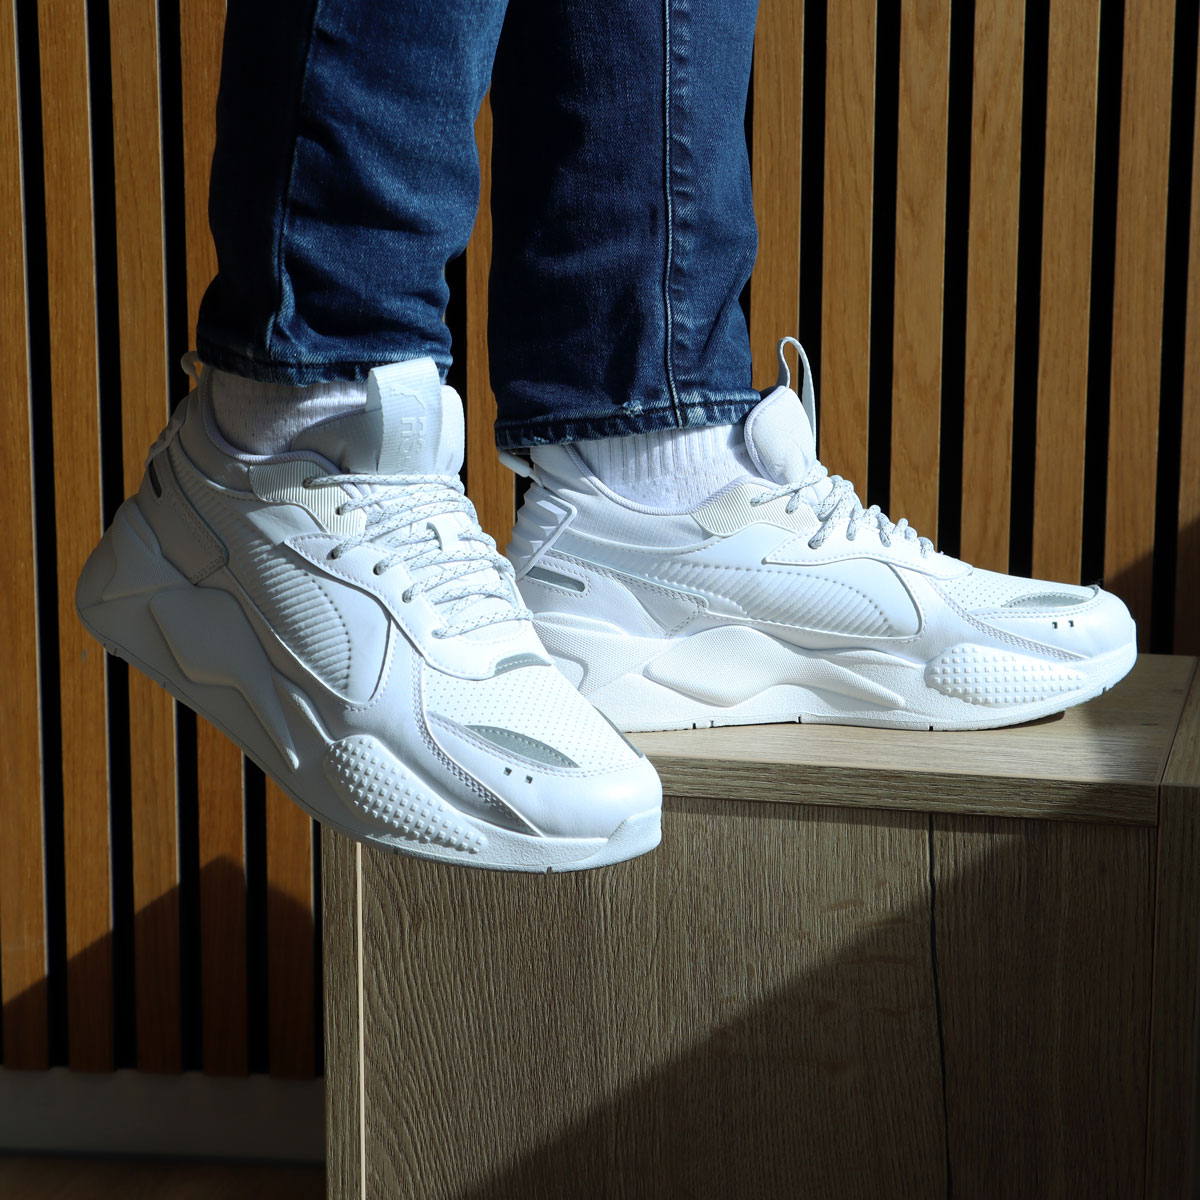 Puma RS-X Triple White sneakers